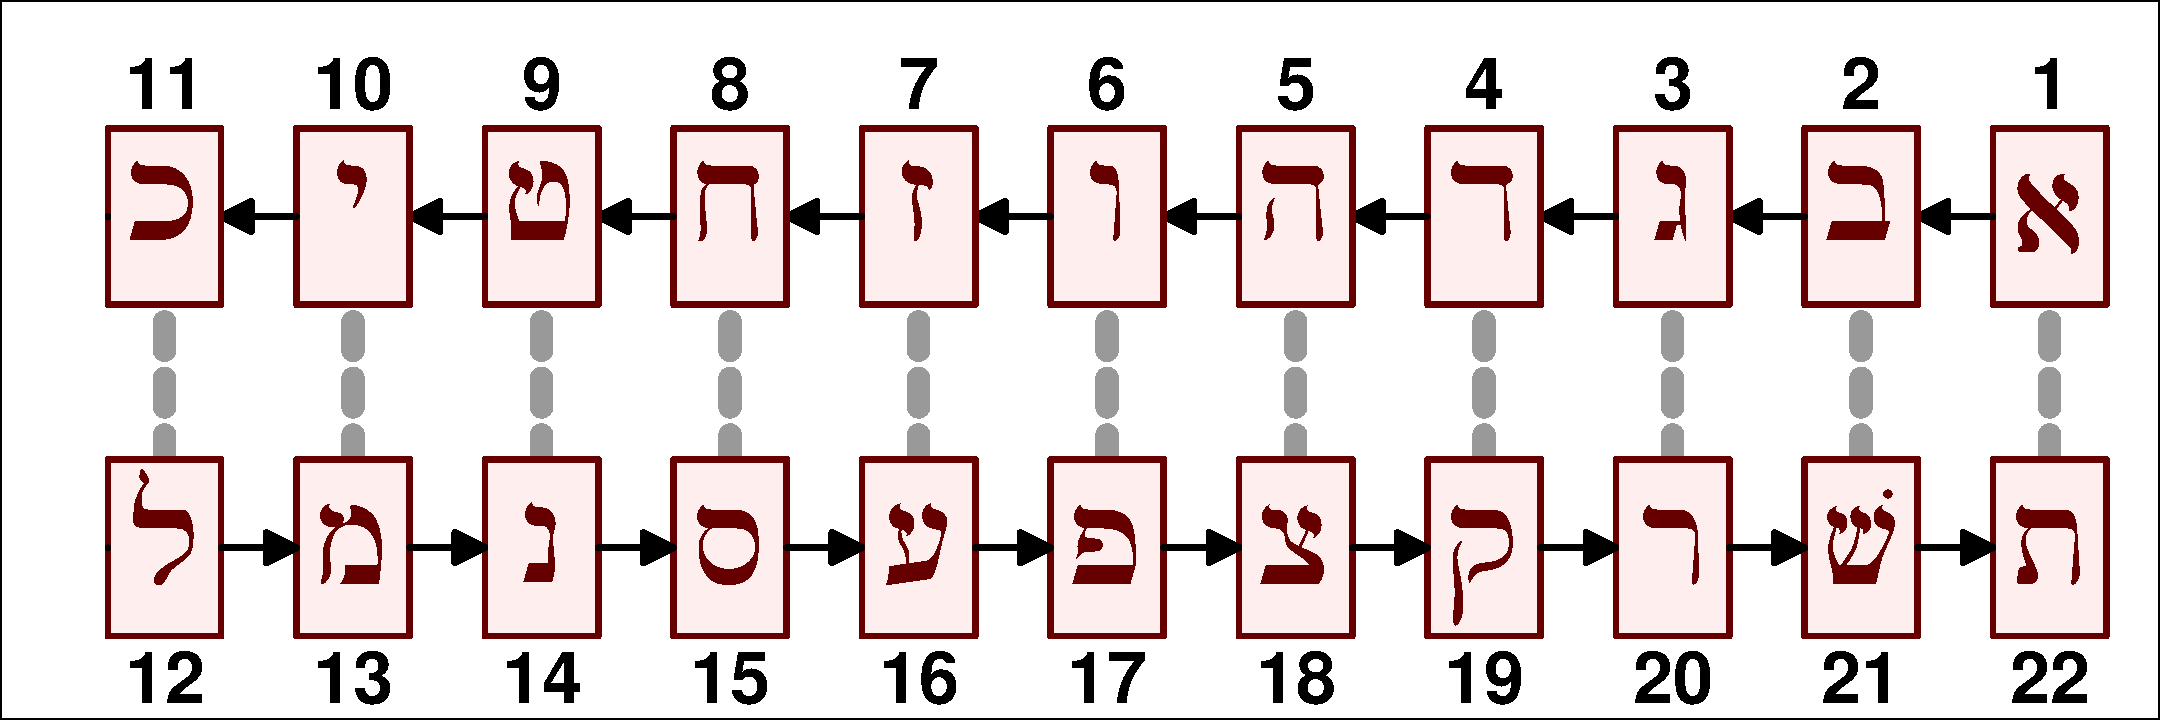 Atbash using Hebrew